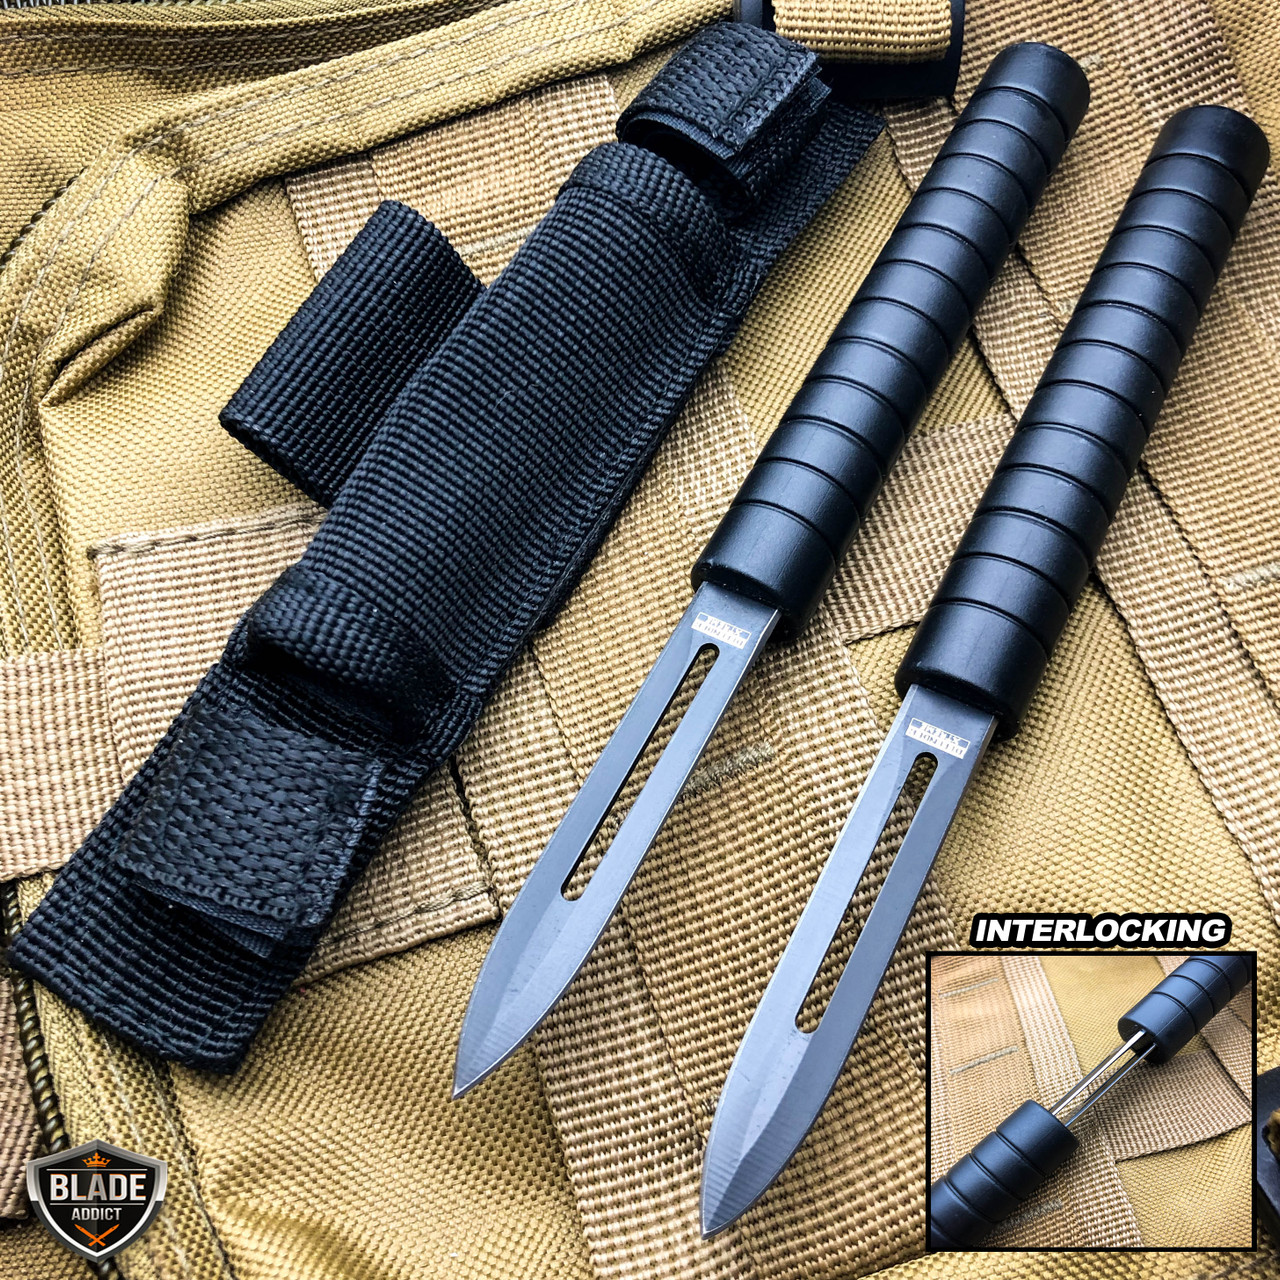 2 SET of 6PC Outdoor Ninja Knife Set w/ Leg Sheath